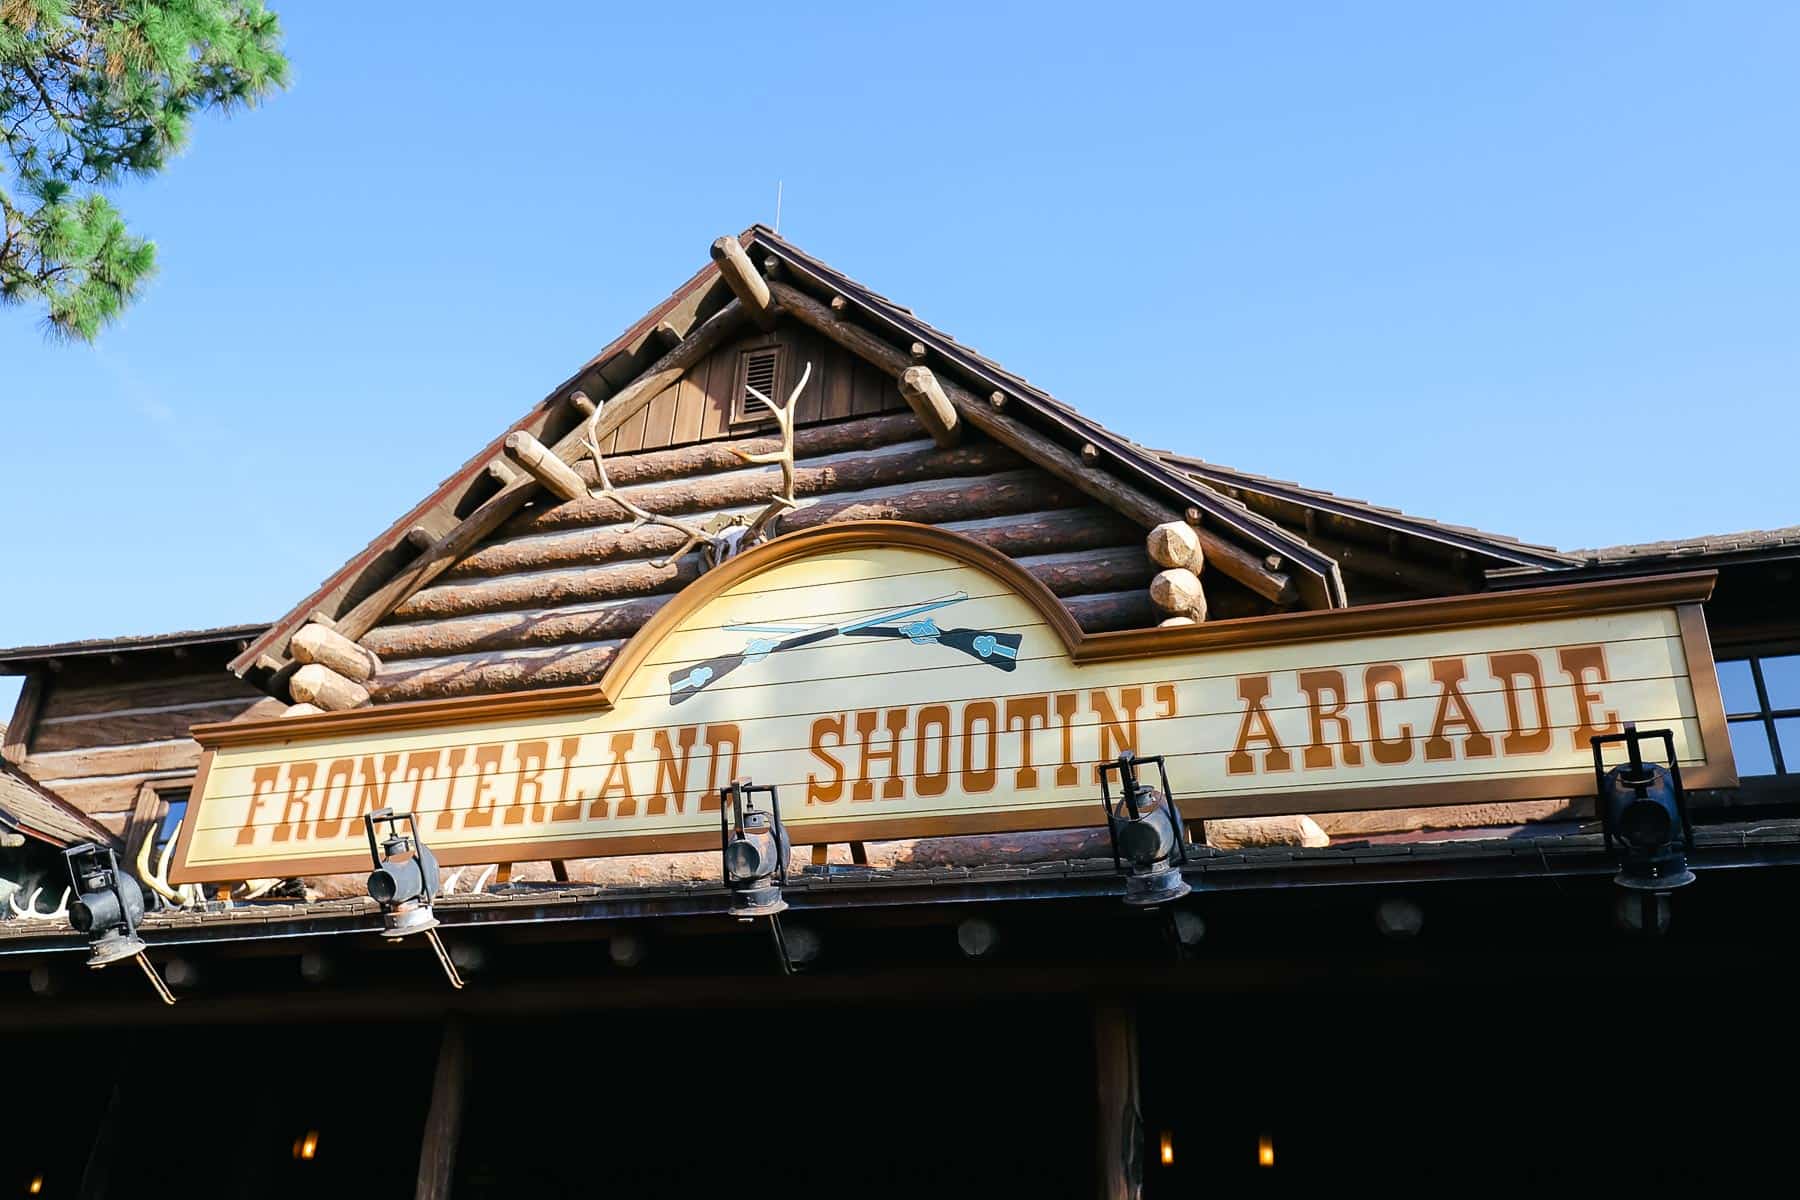 Frontierland Shootin’ Arcade at Magic Kingdom